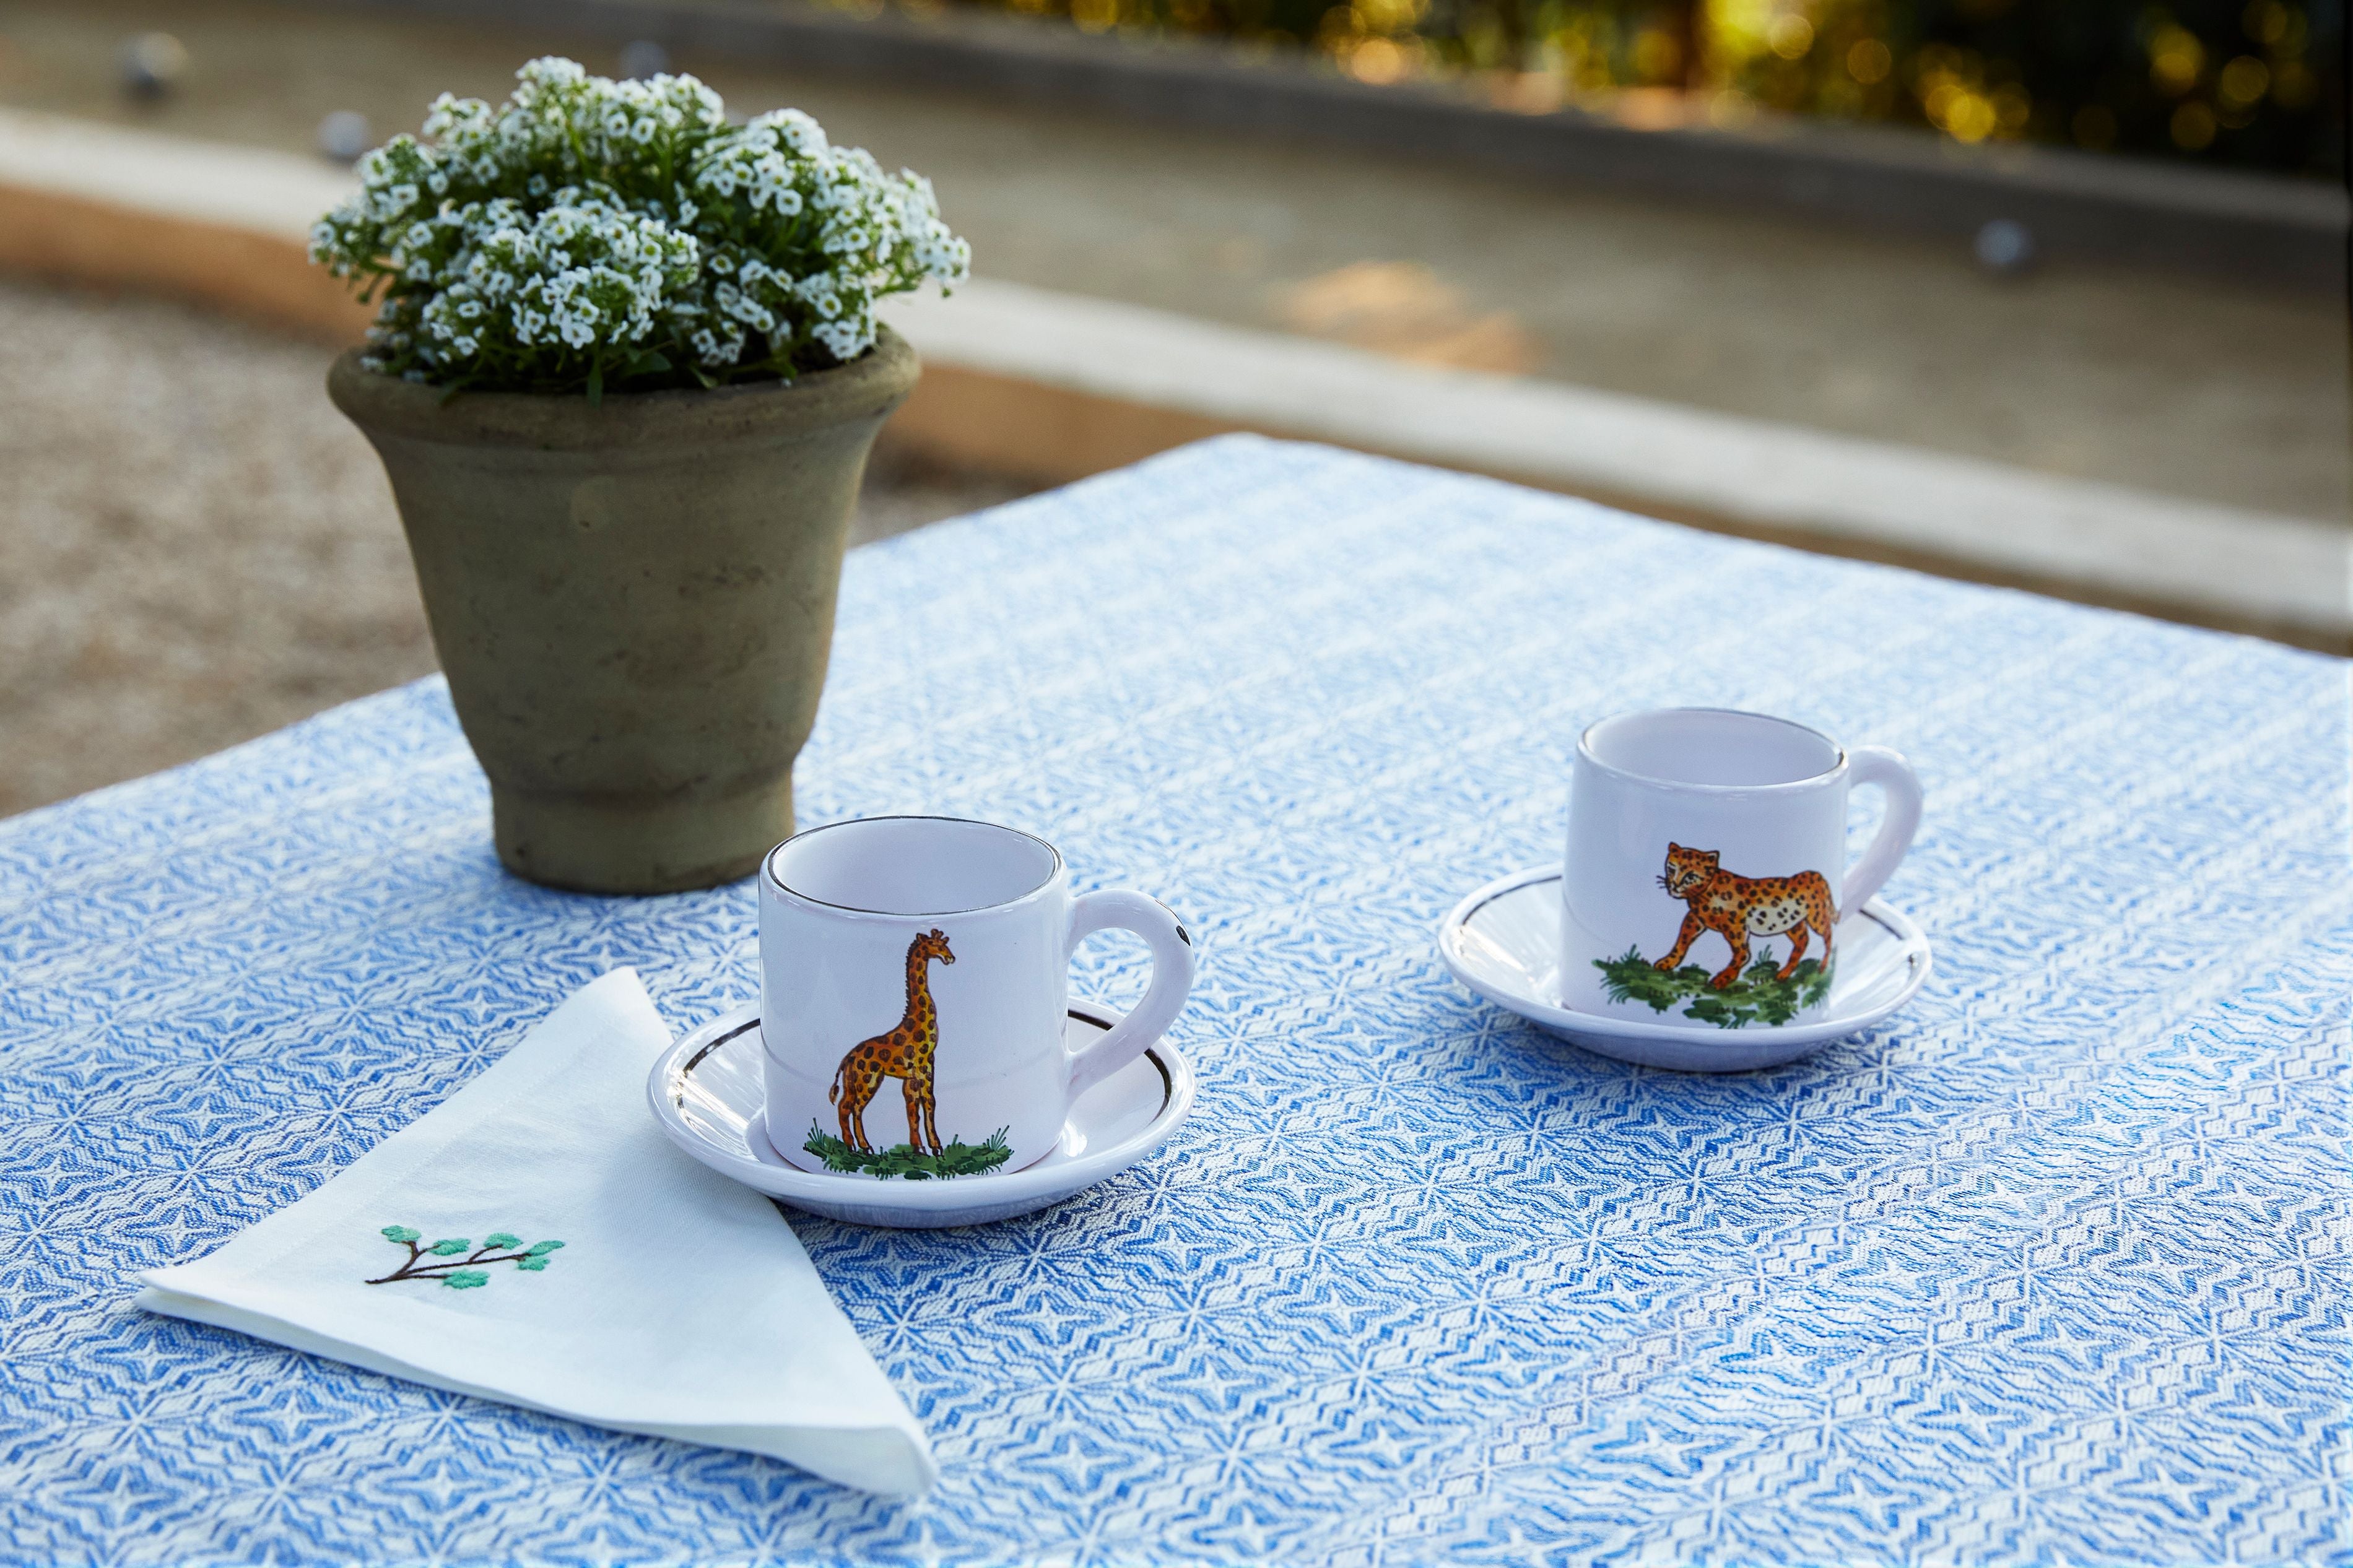 Animaux de la Savane Pair of Espresso Cups & Saucers, Giraffe